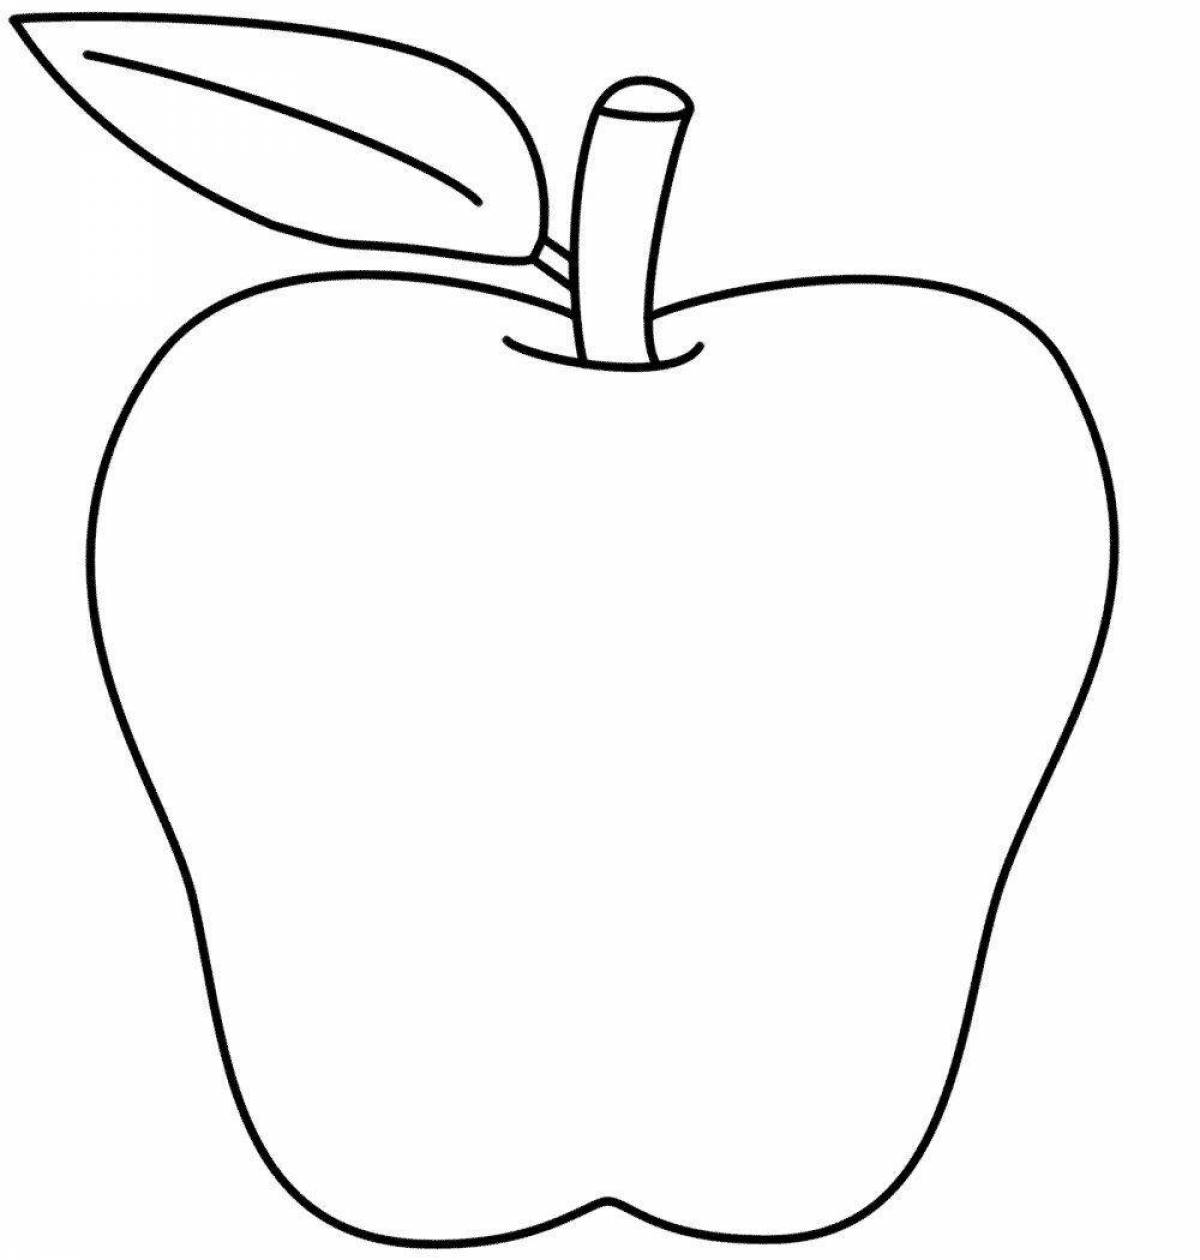 Colored apple for children